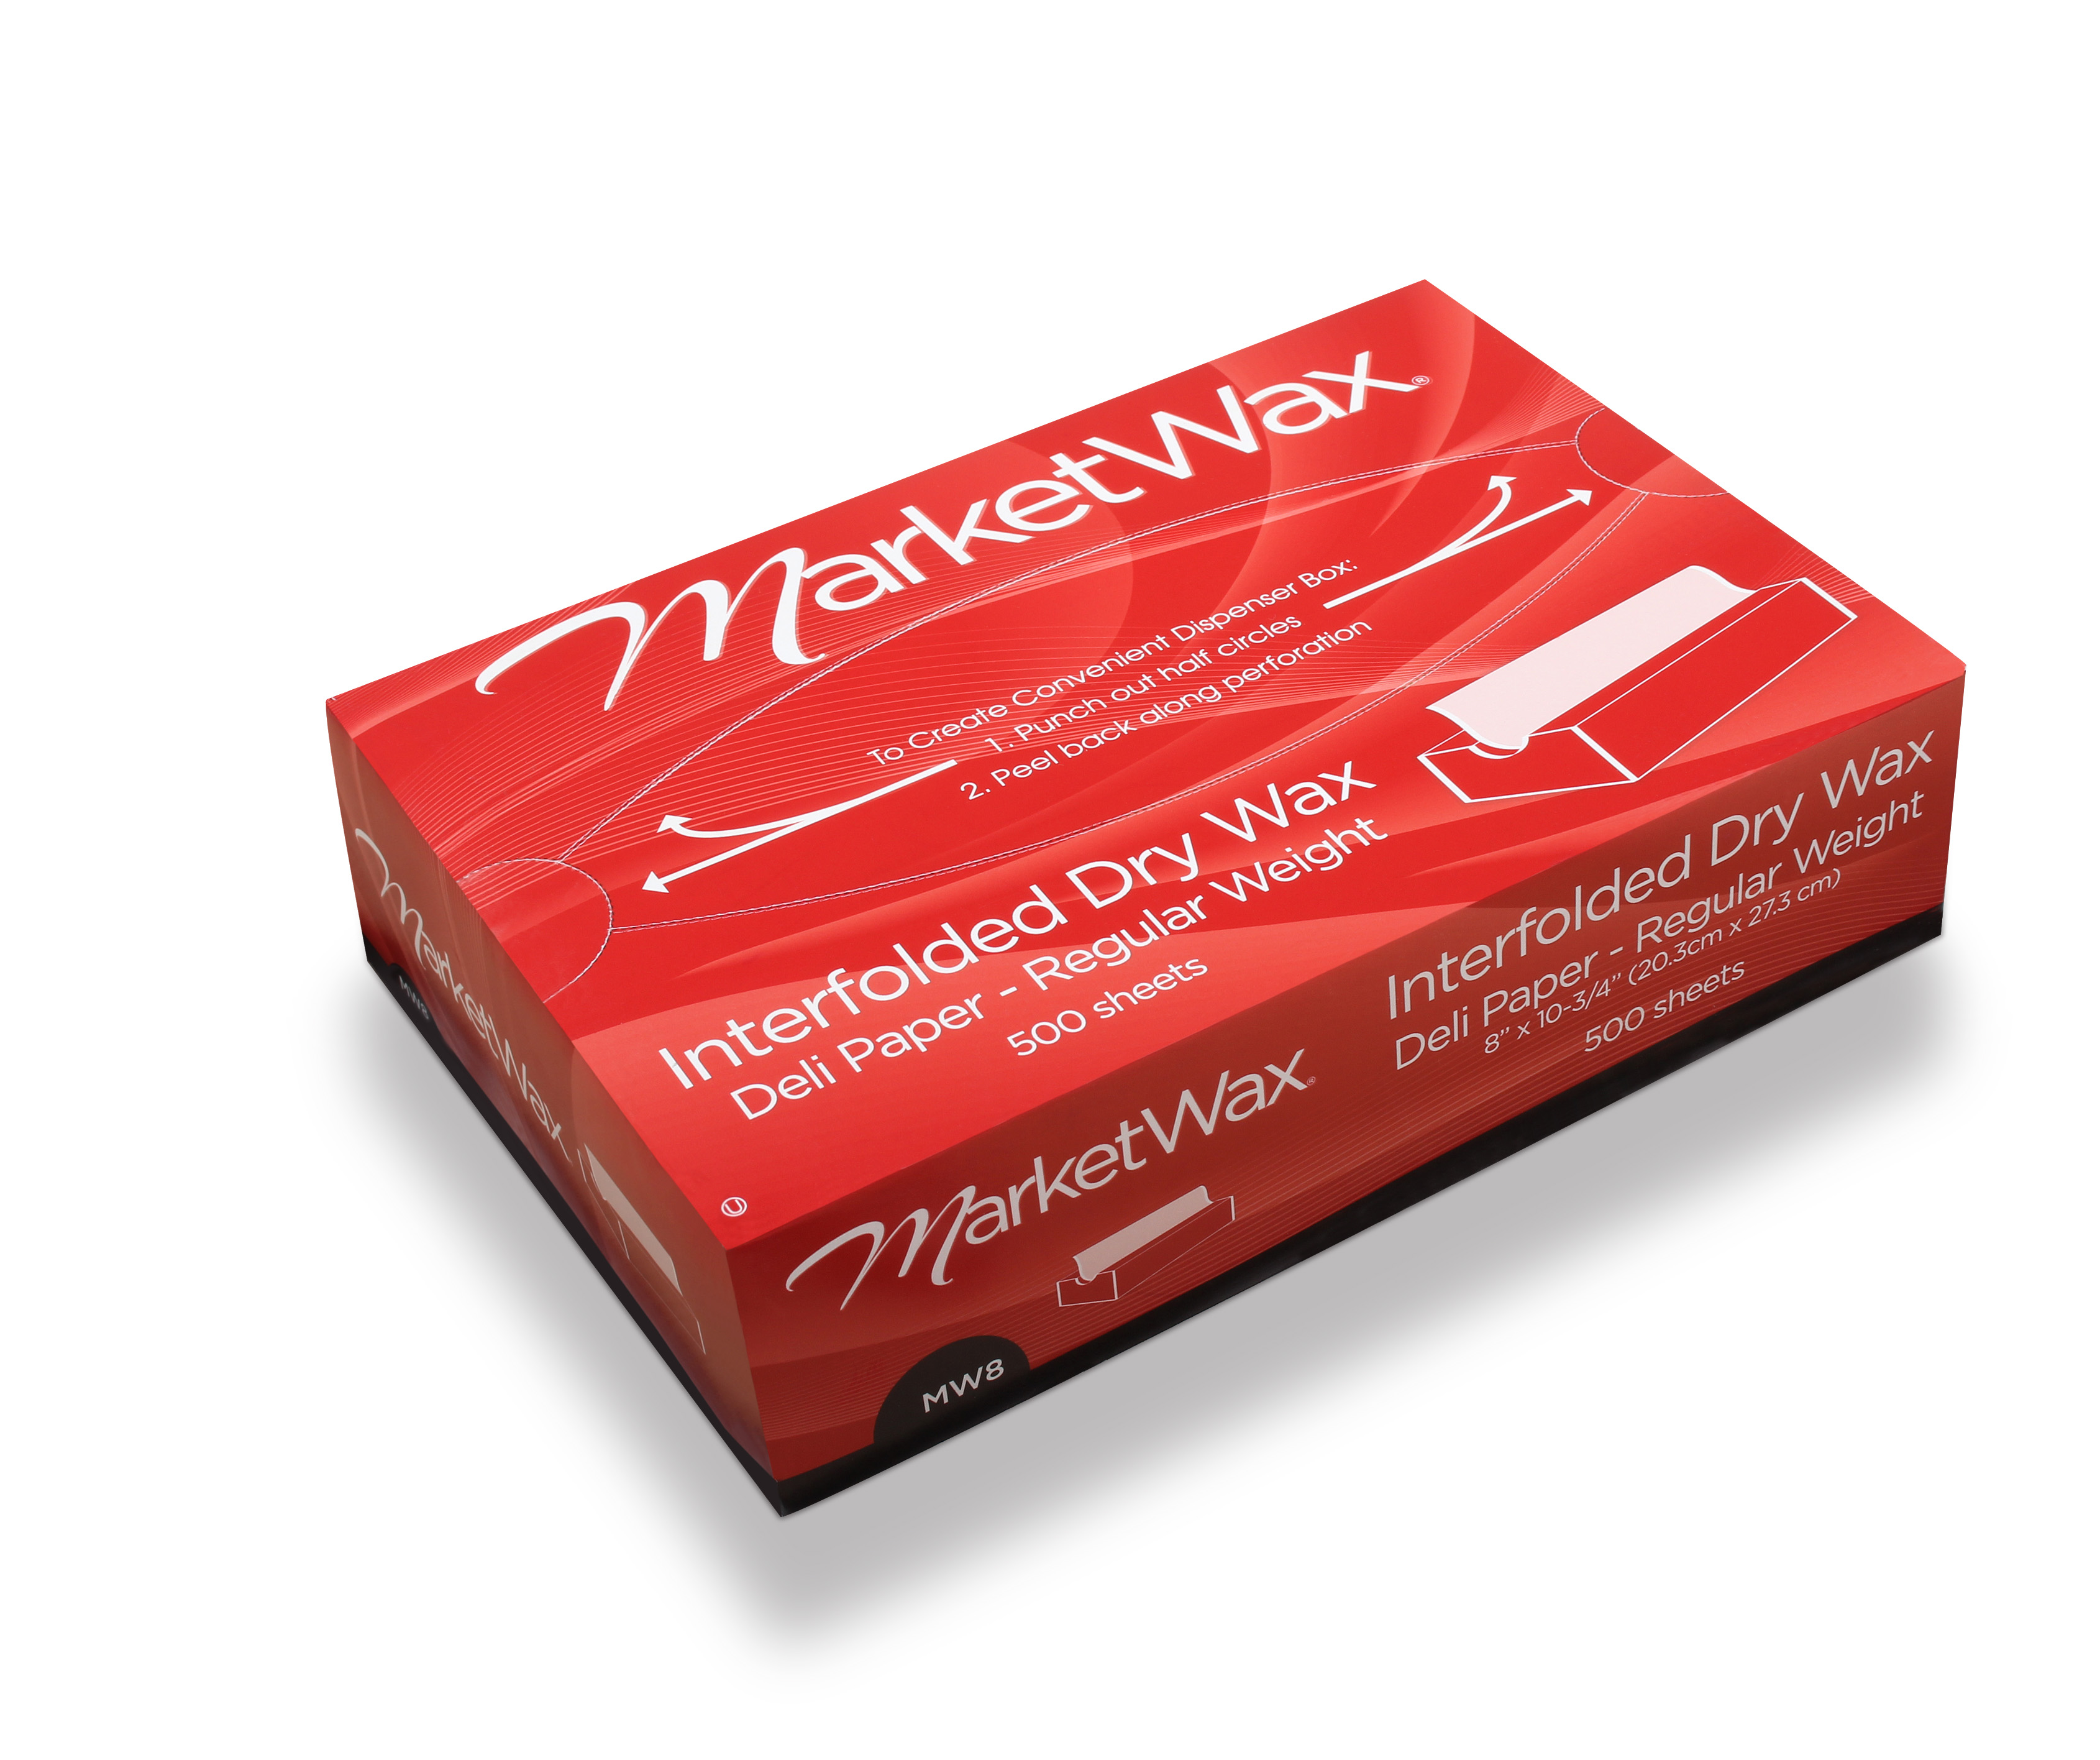 011012 MW12 MarketWax 12&quot; x 
10.75&quot; Interfolded Dry Wax 
Deli Sheets - 6000(12/500)